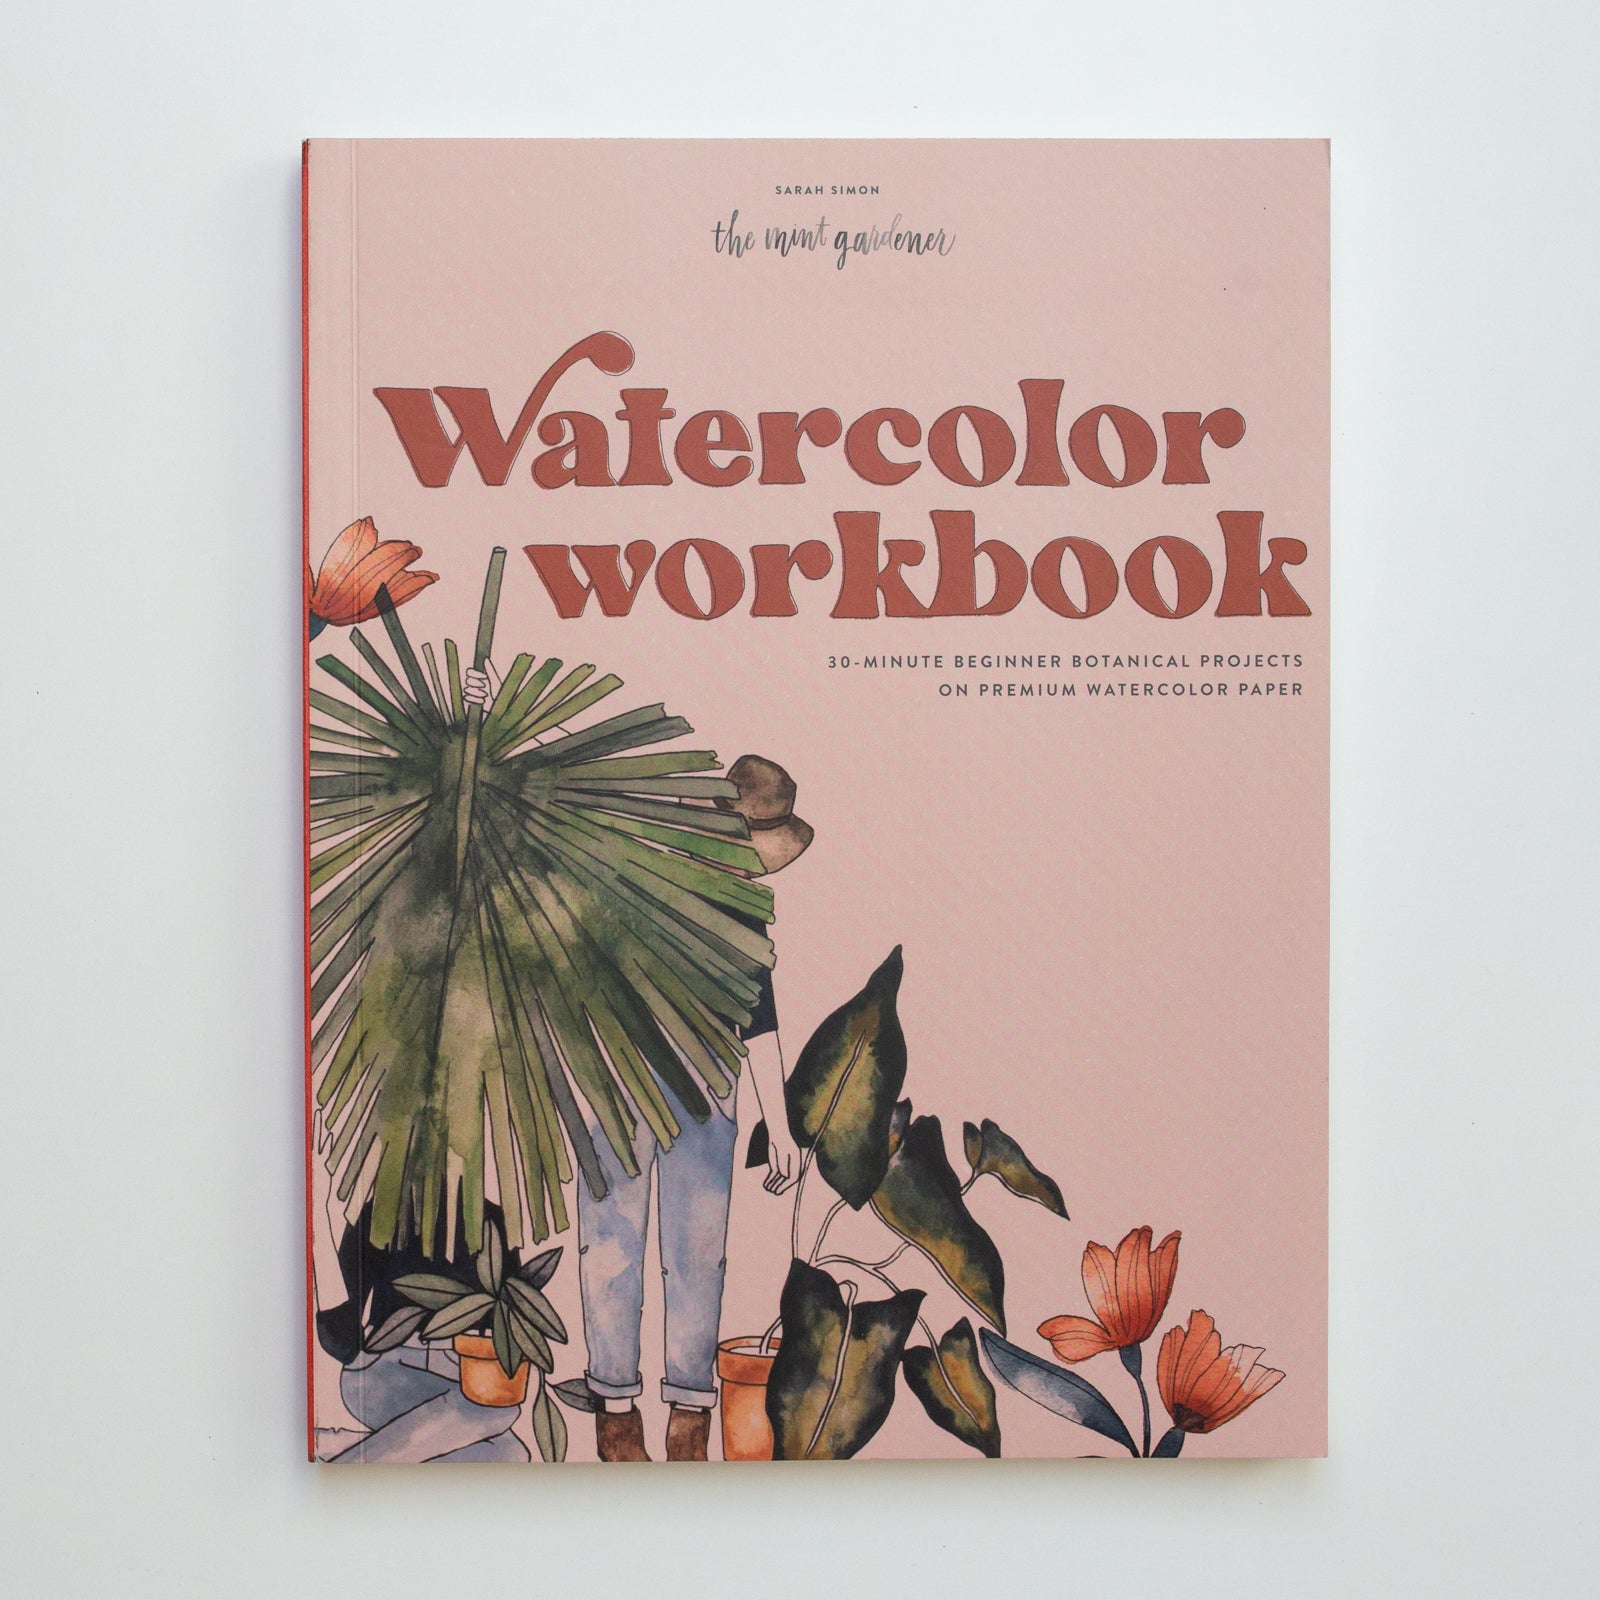 Watercolor Workbook by Sarah Simmon